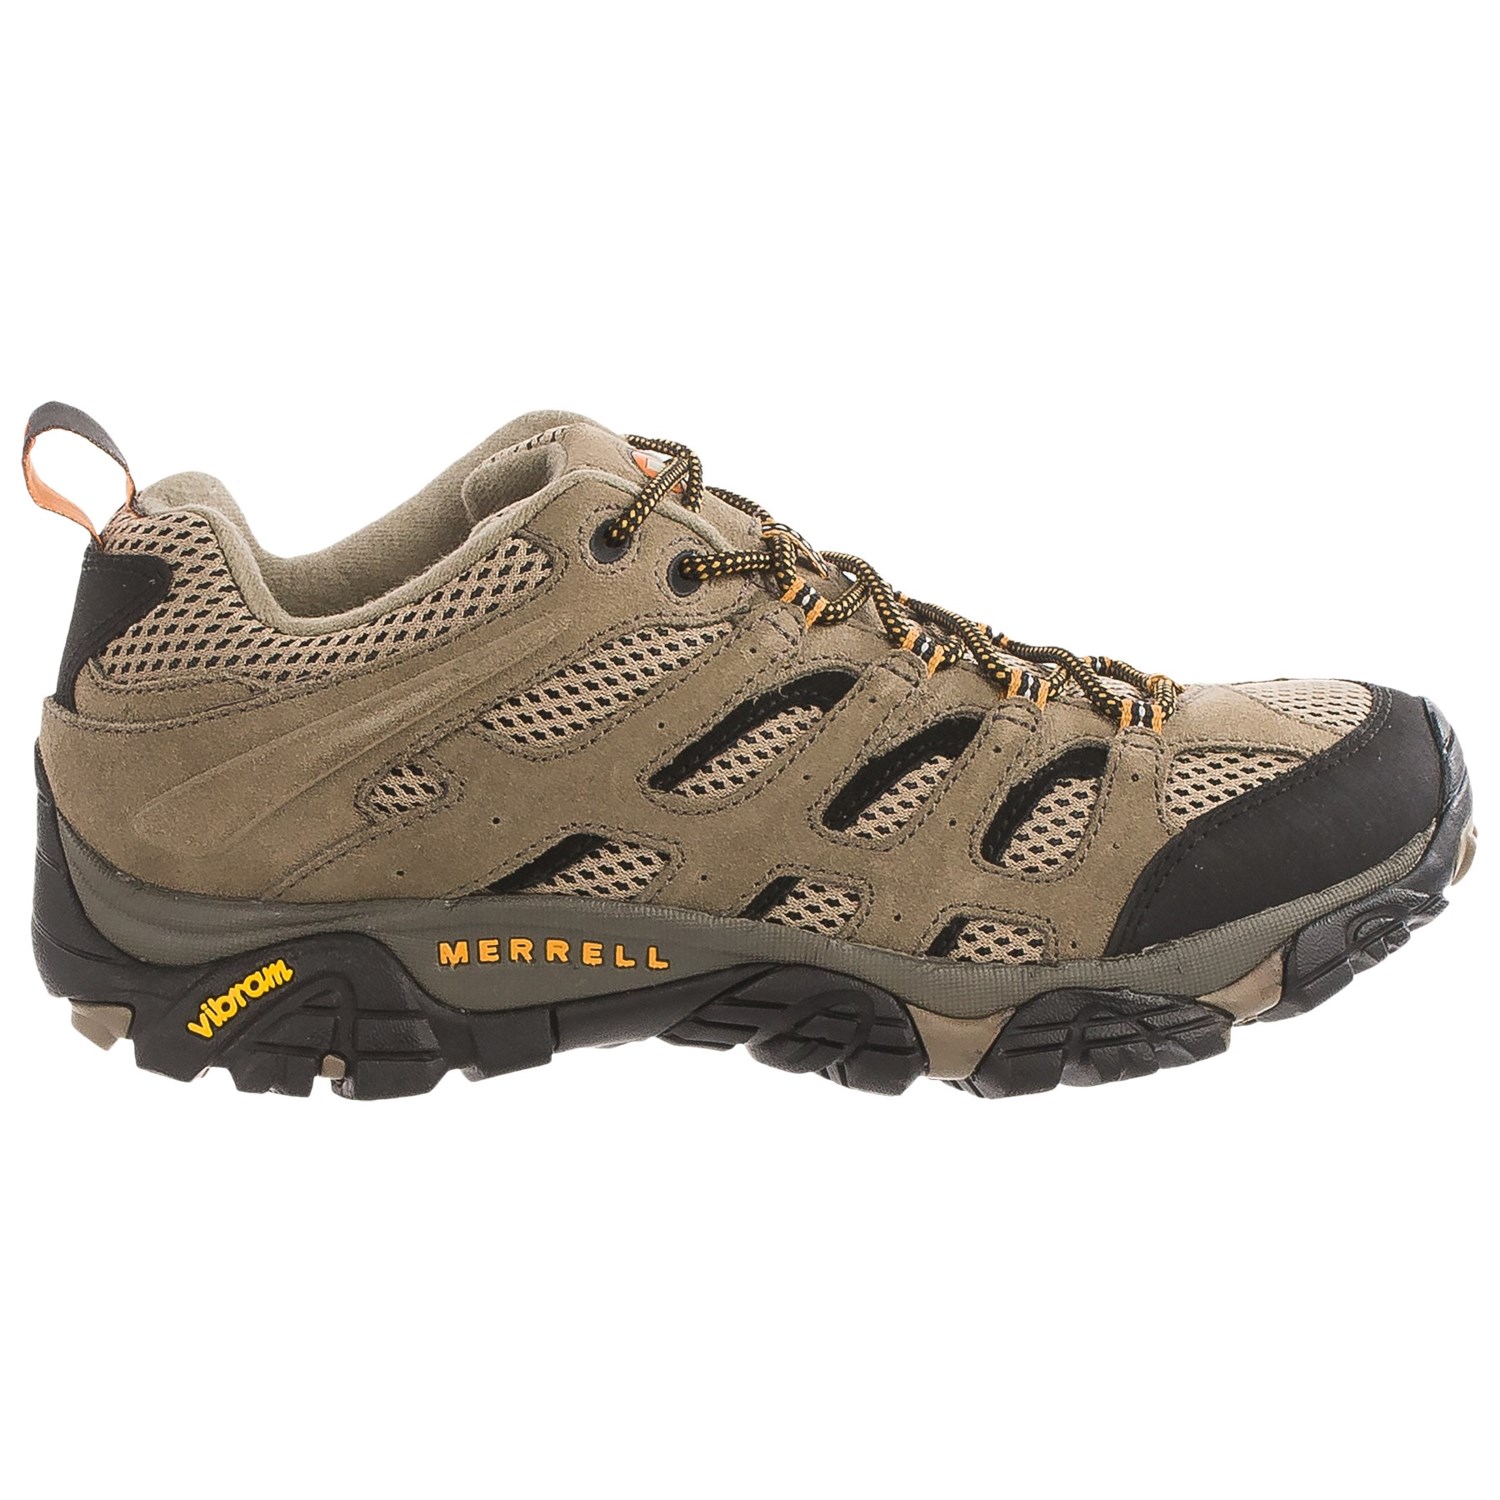 Merrell Moab Ventilator Hiking Shoes (For Men) - Save 40%